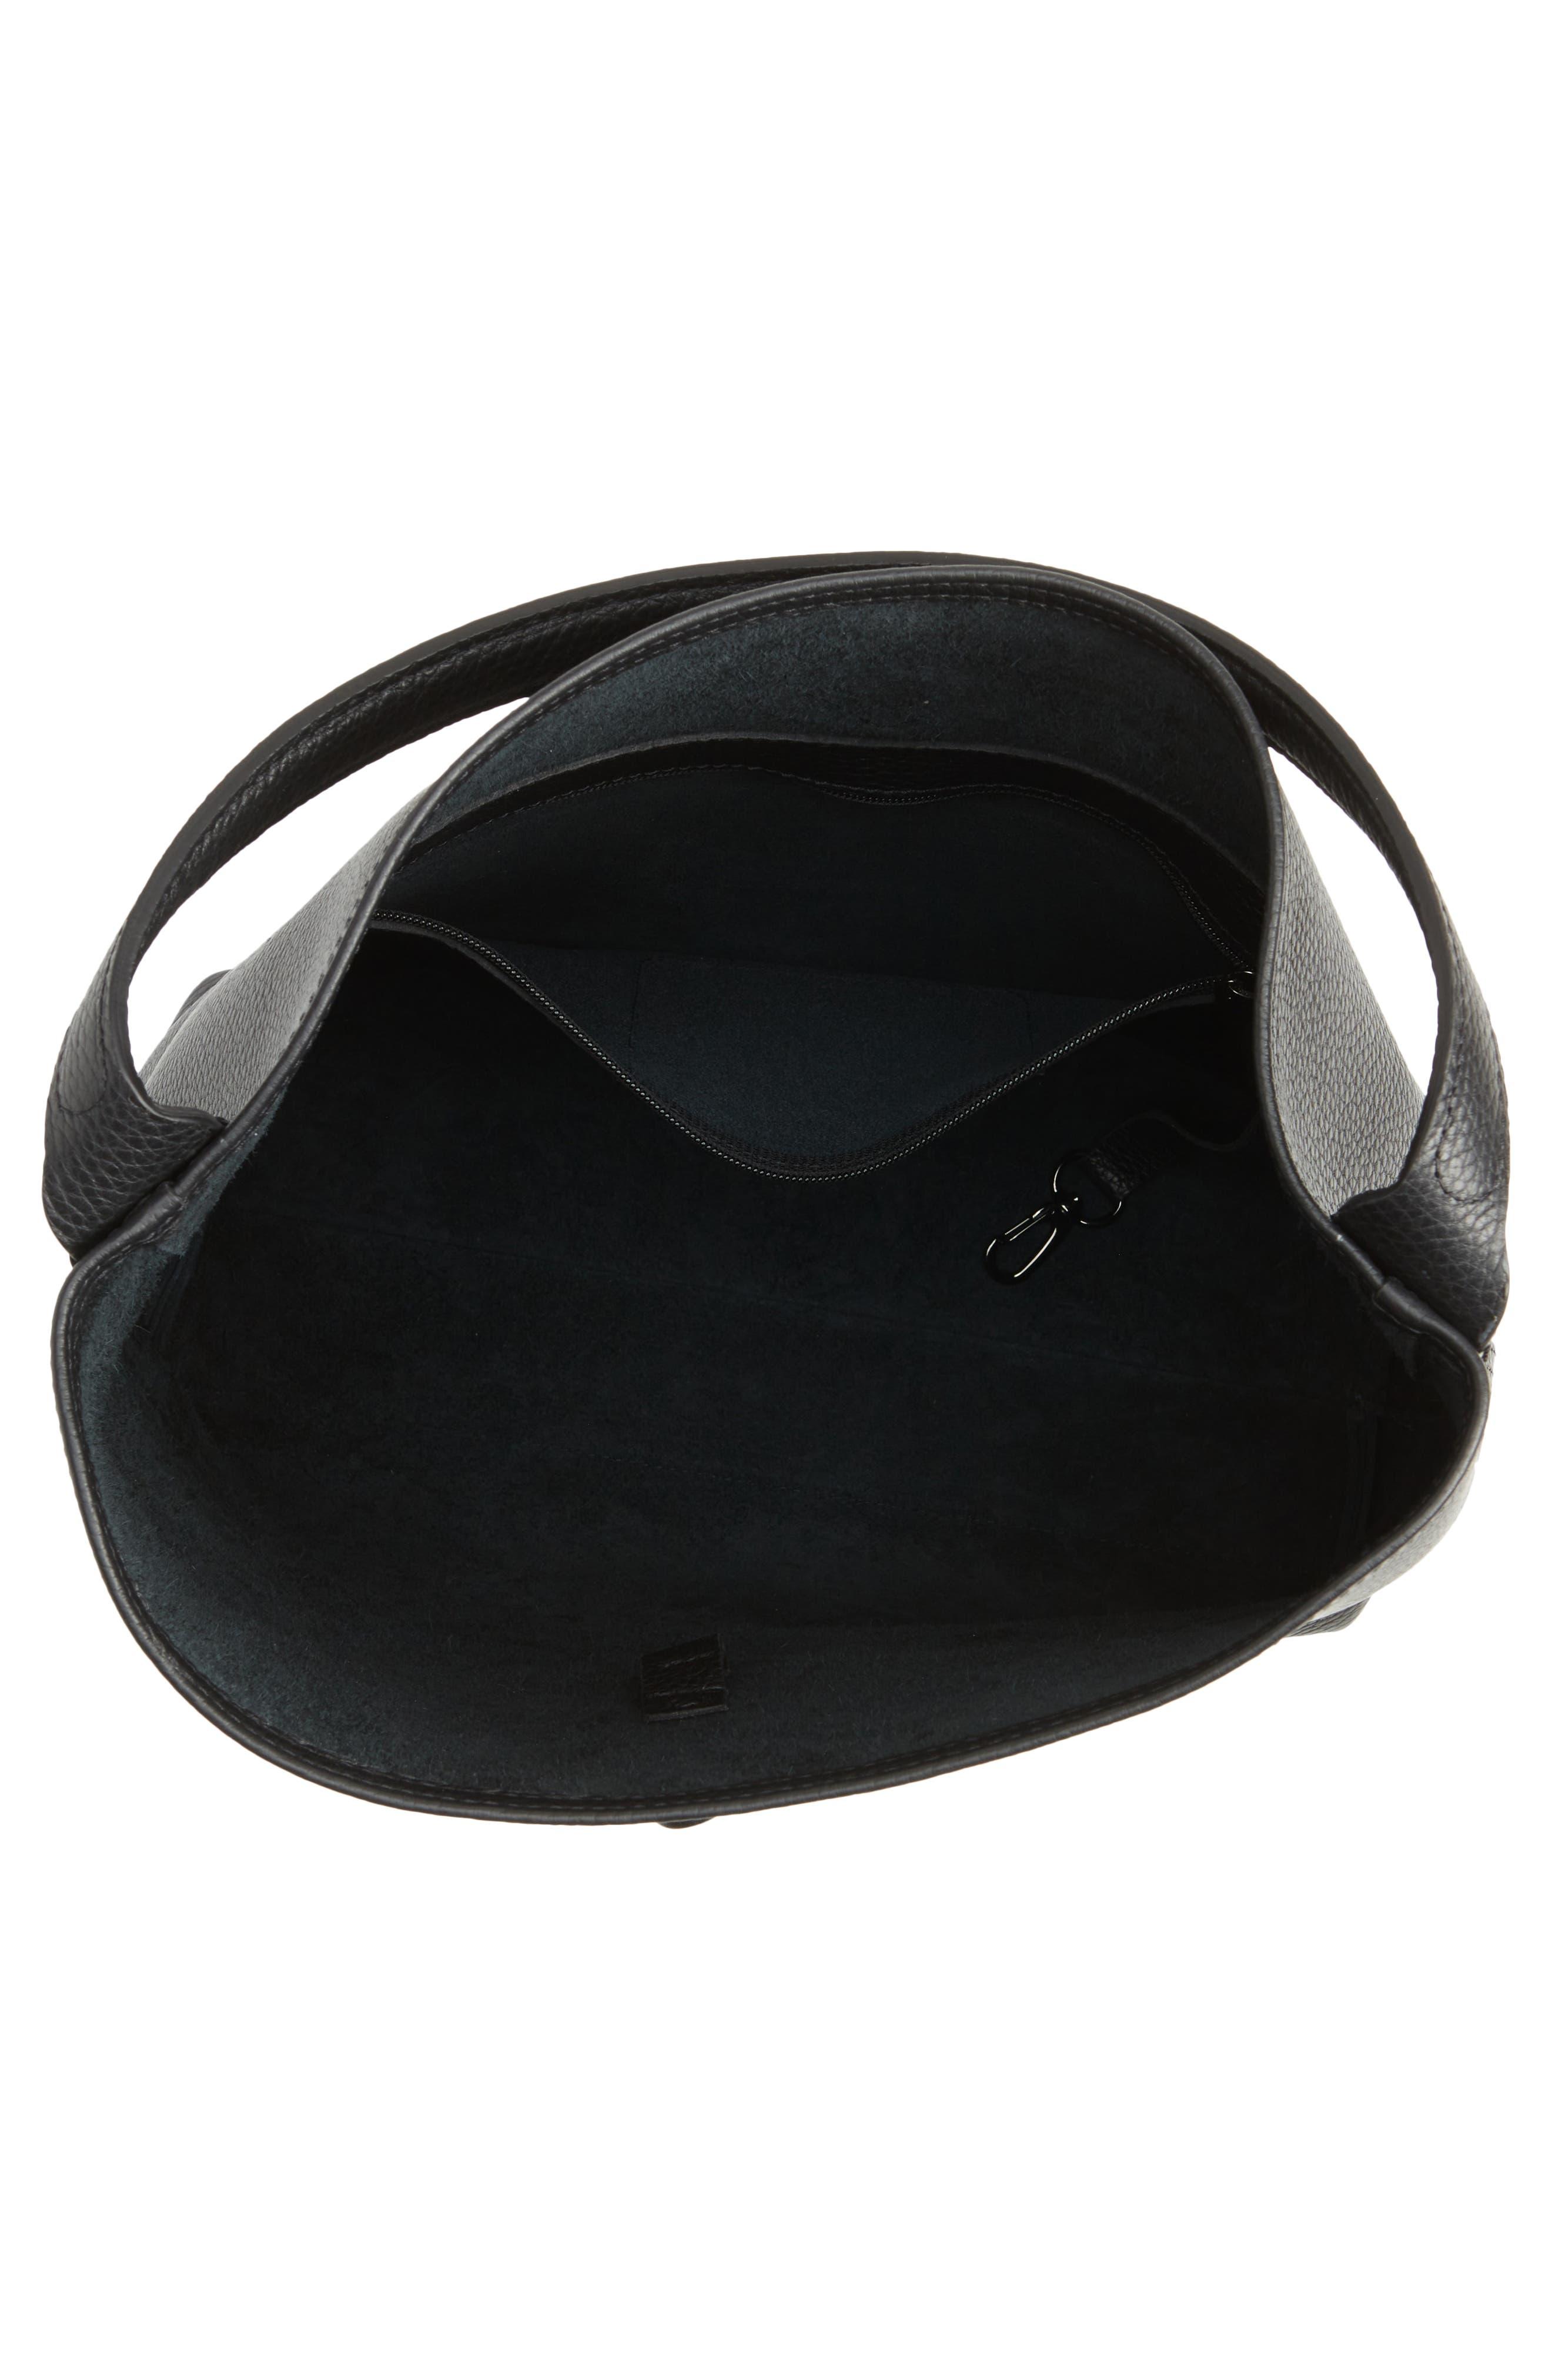 Longchamp Roseau Essential Leather Hobo